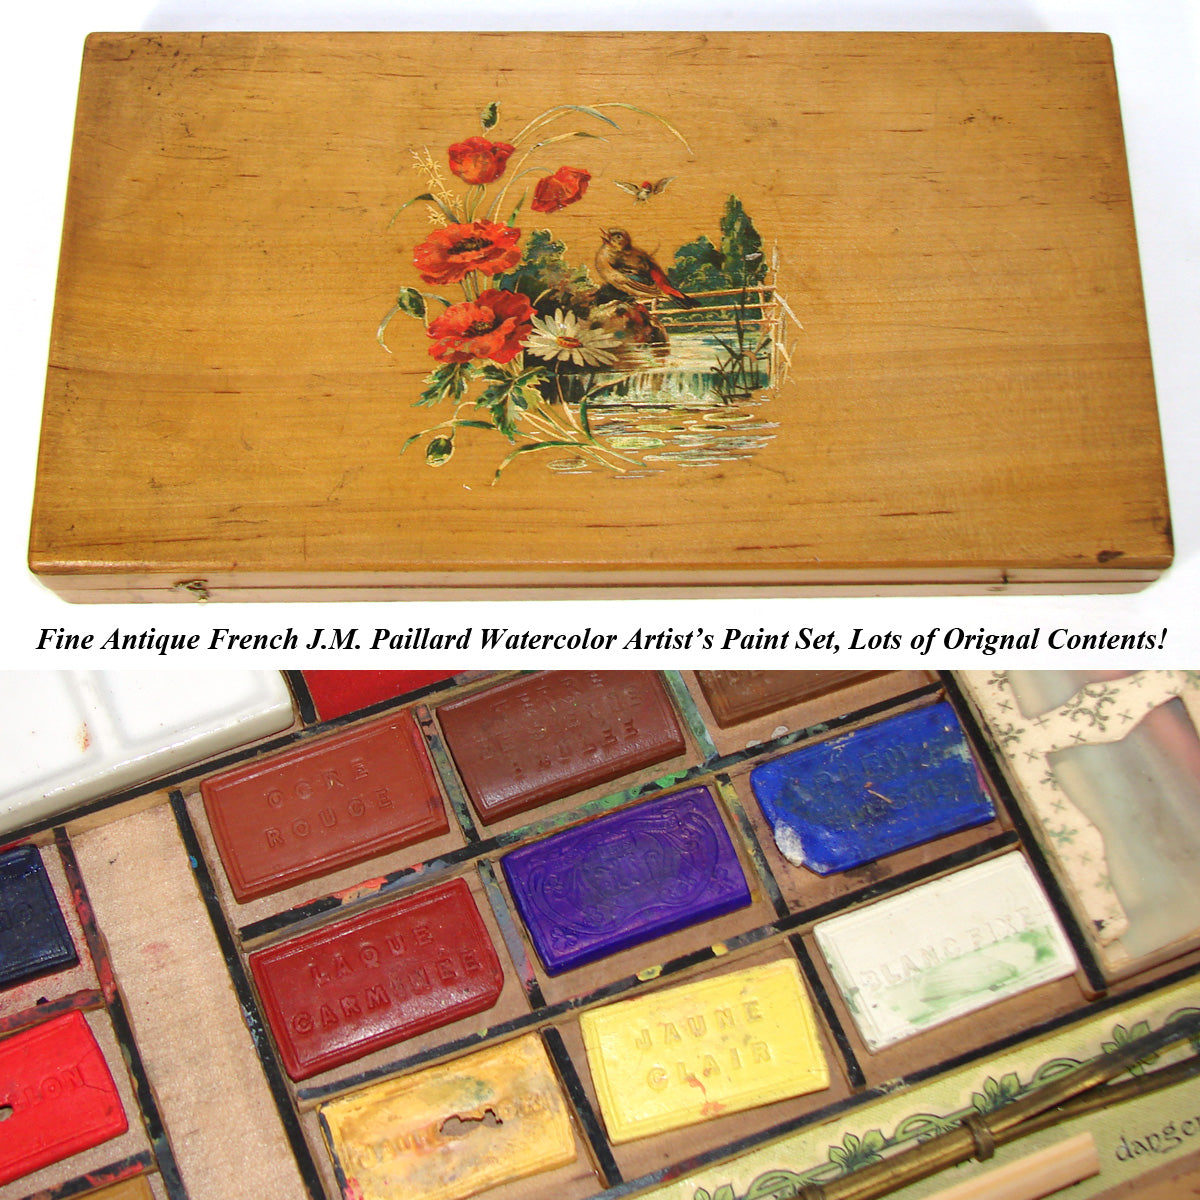 Antique French J.M. Paillard Watercolor Artist's Paint Set, Box with Lots of Contents